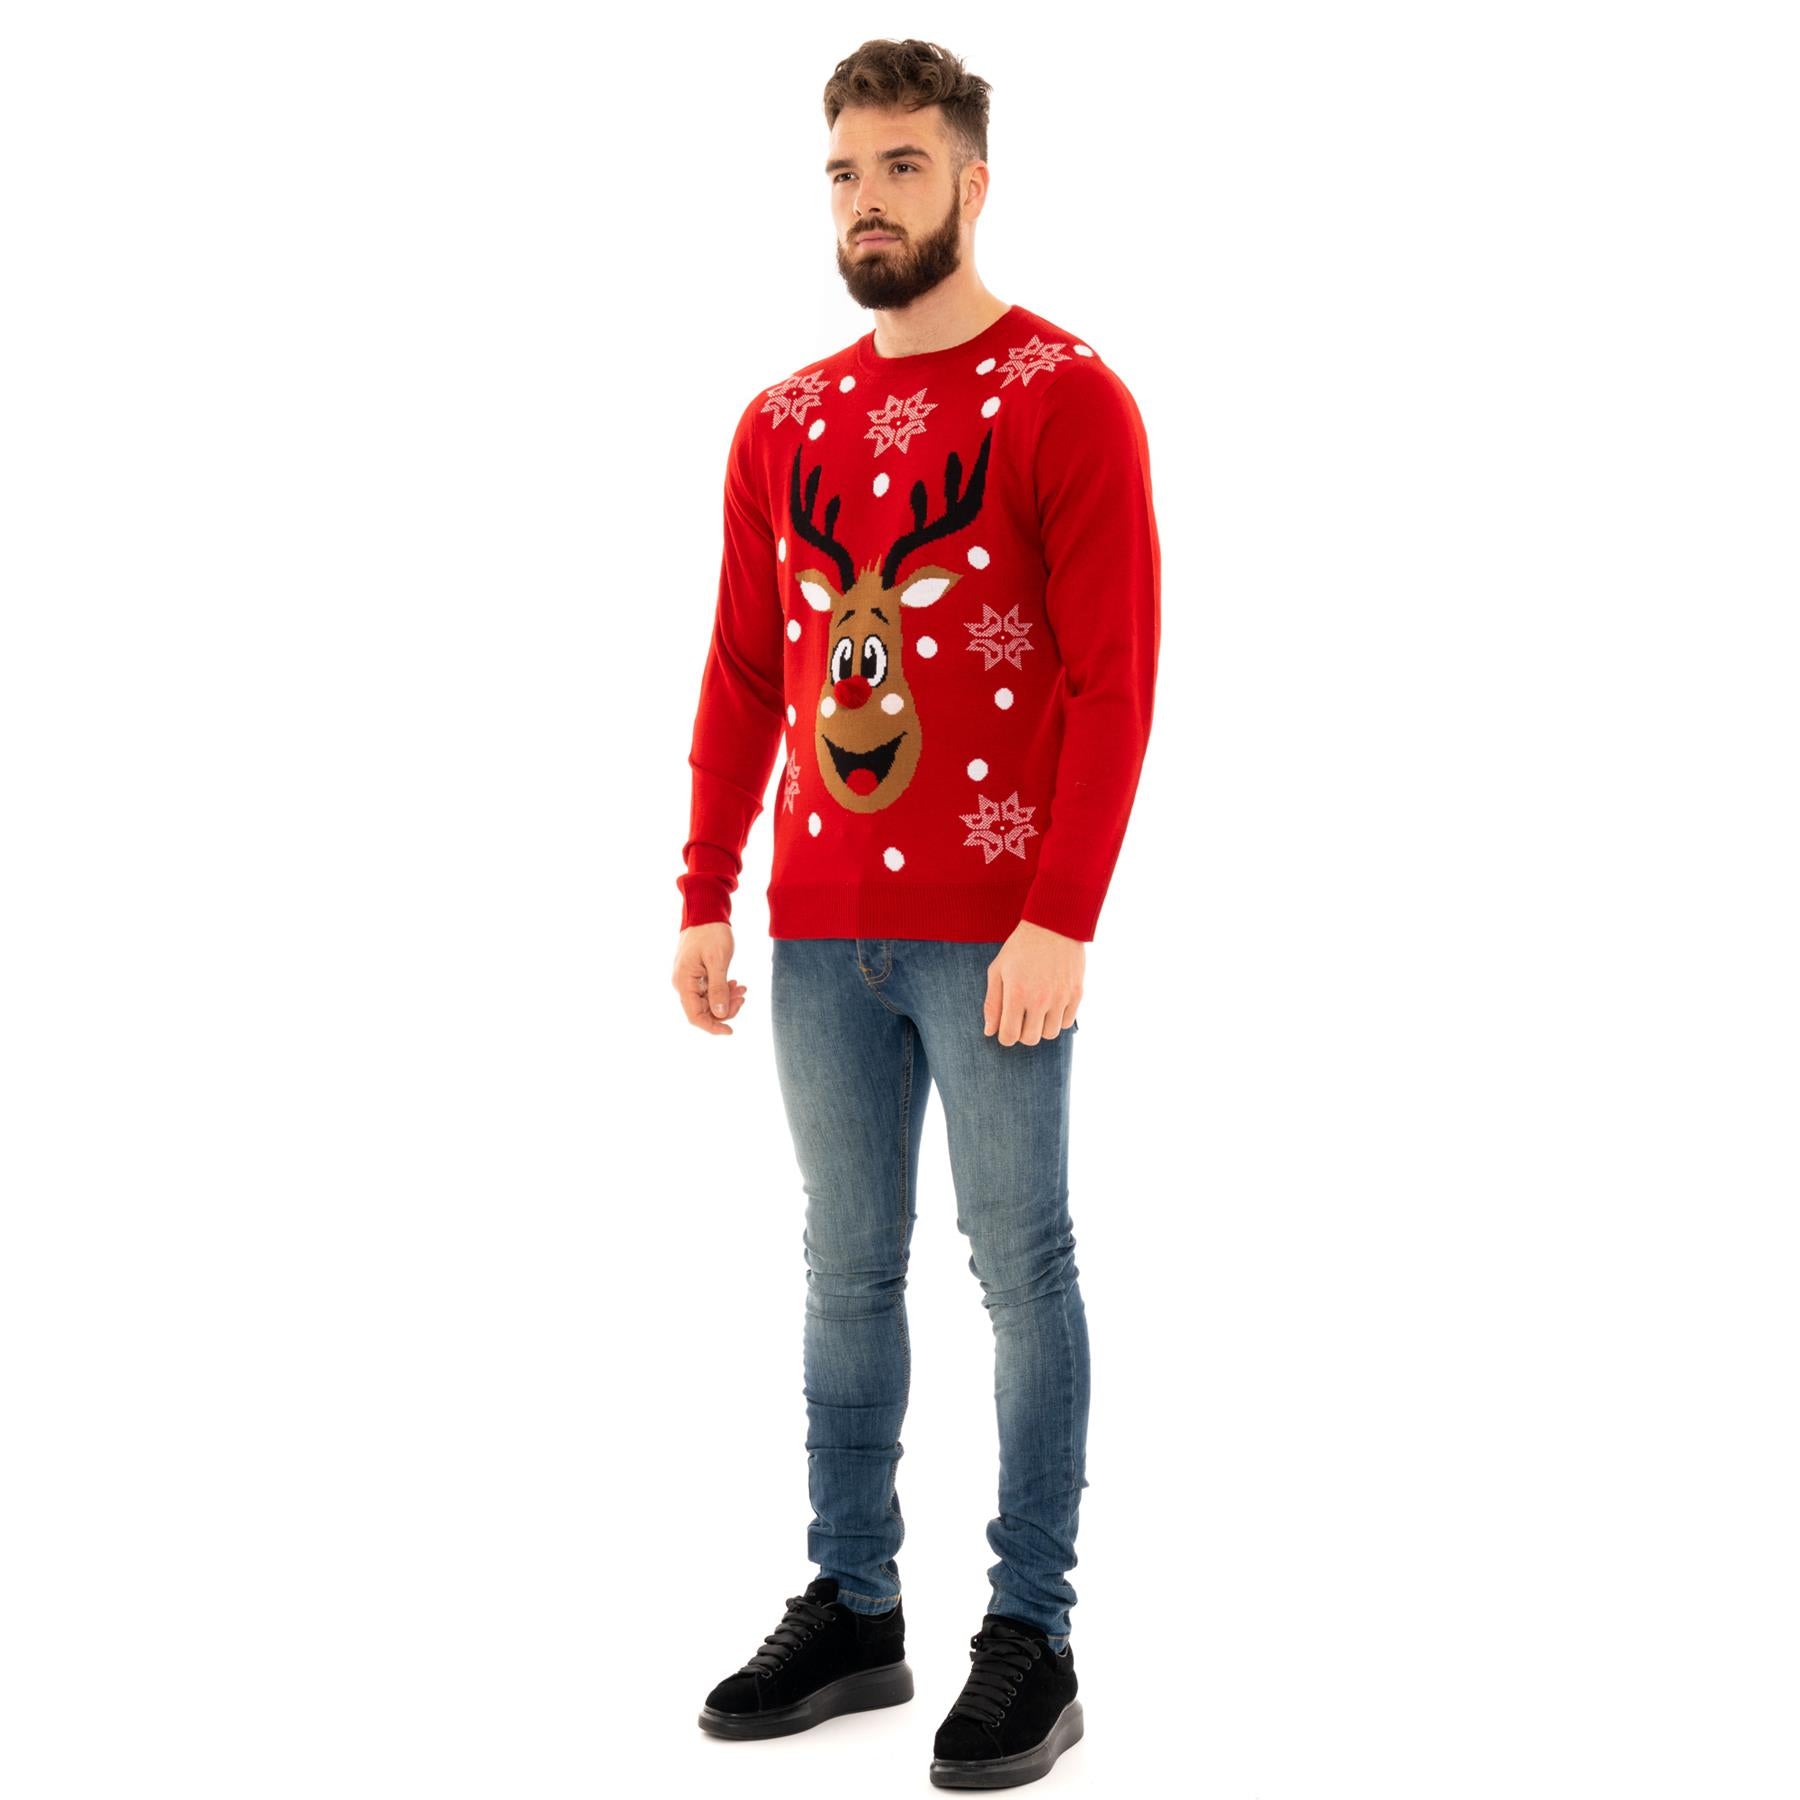 3D Rudolph Christmas Sweater